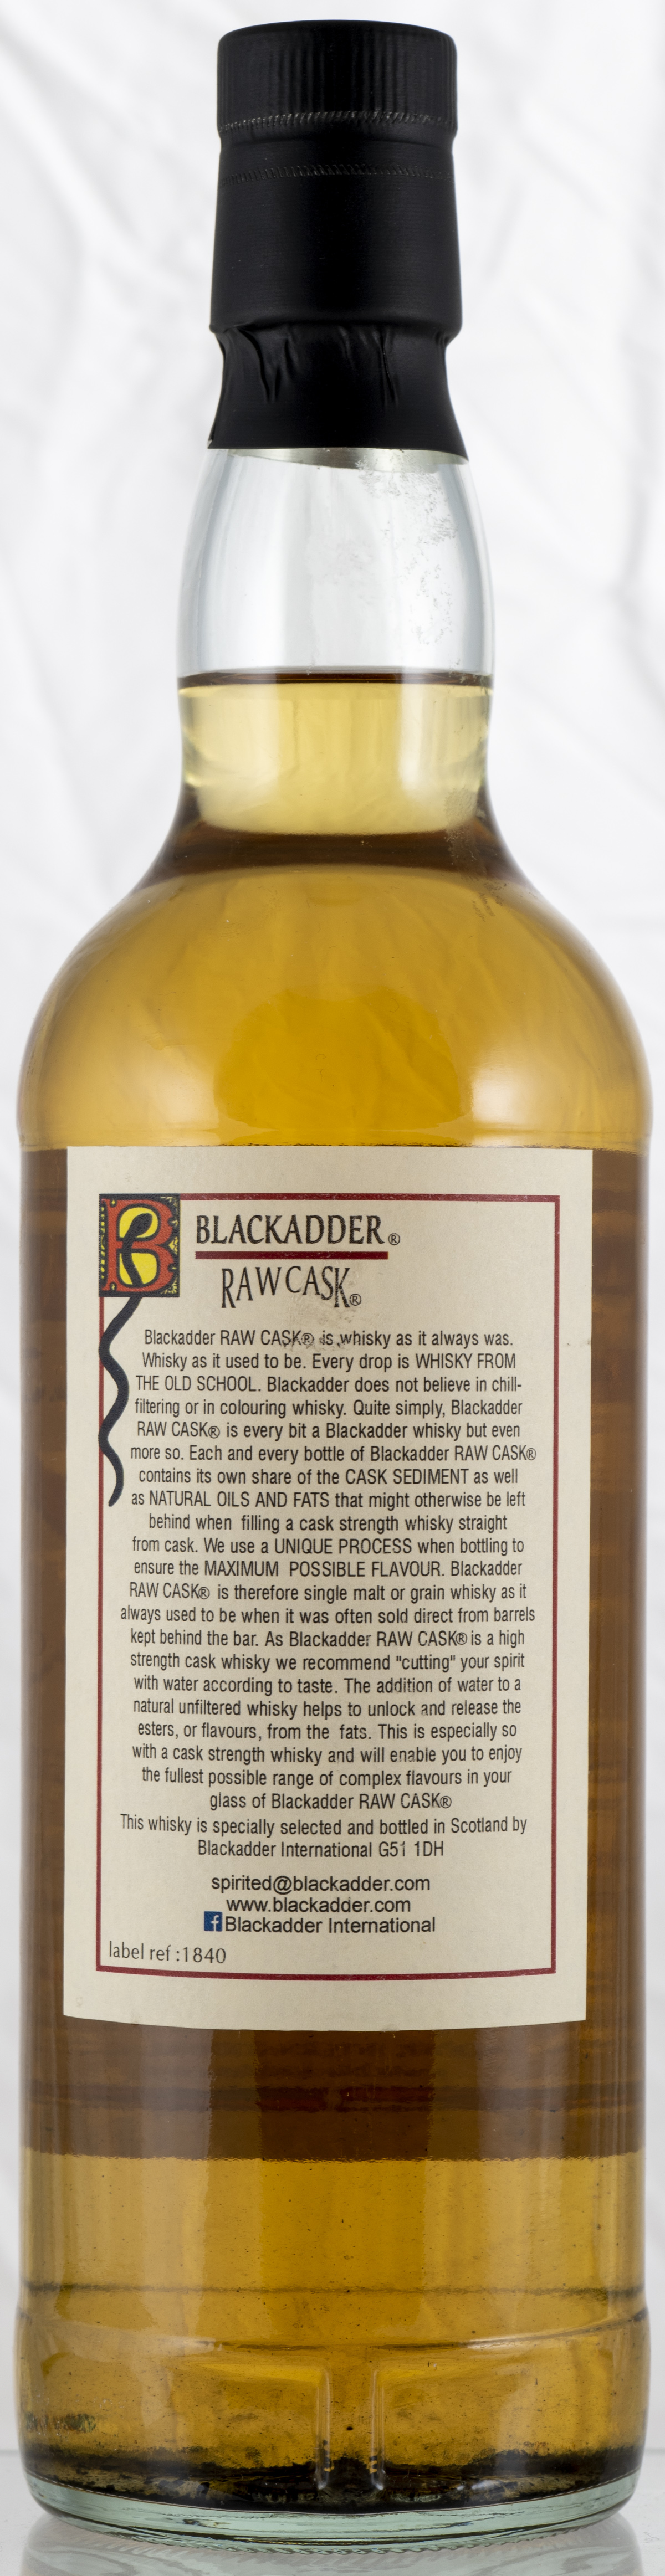 Billede: PHC_4011 - Blackadder Raw Cask Bunnahabhain 13 - bottle back.jpg